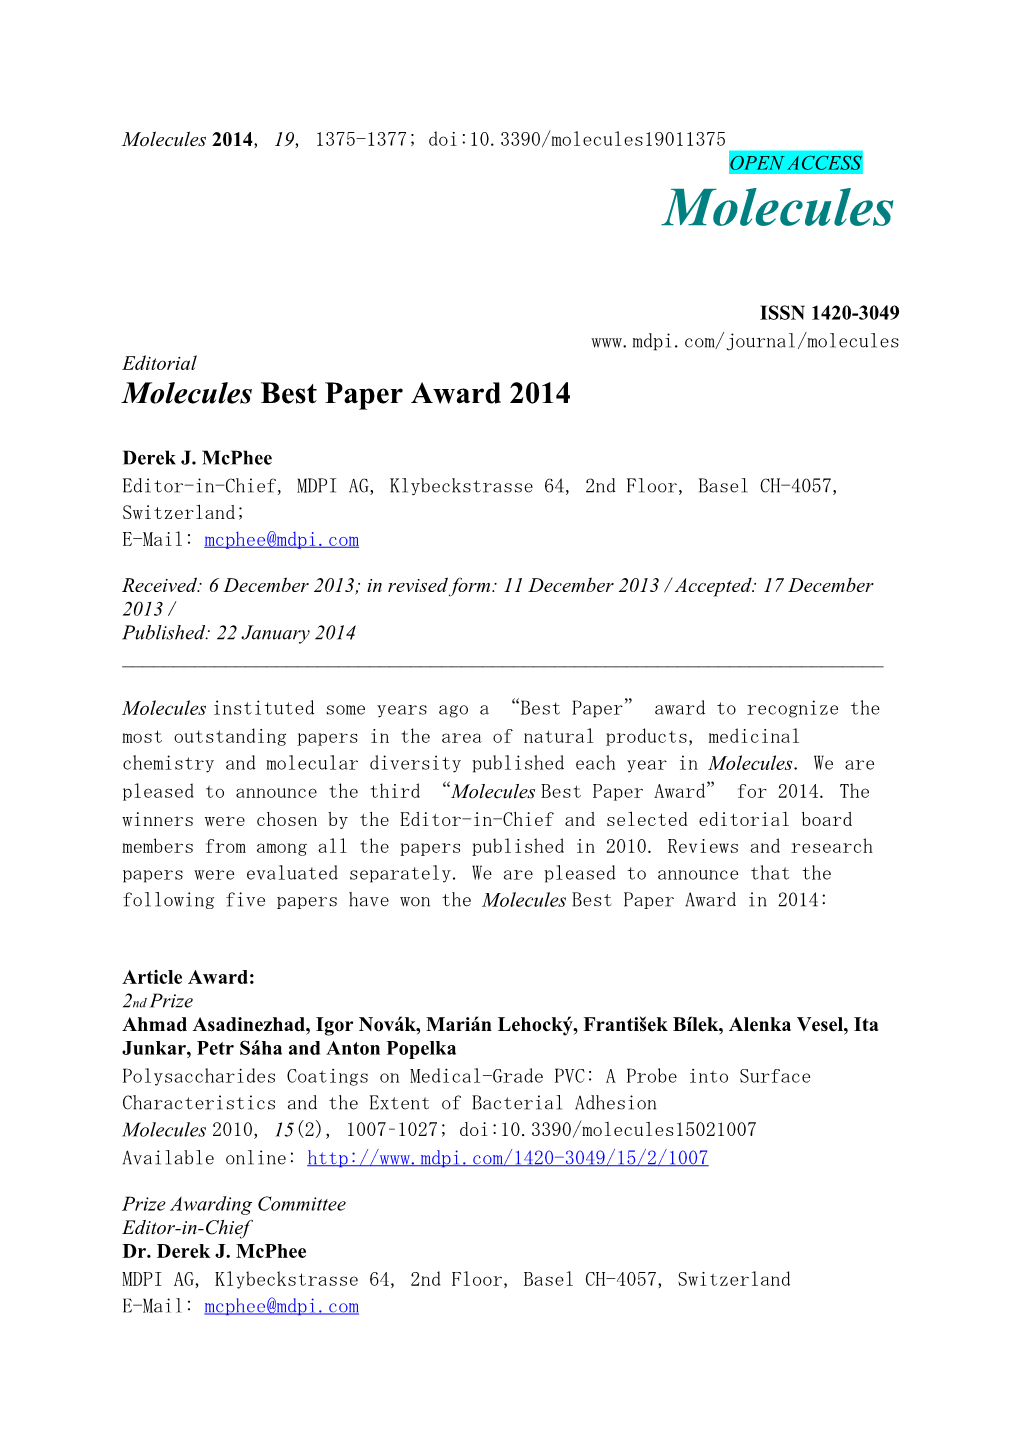 Molecules Best Paper Award 2014